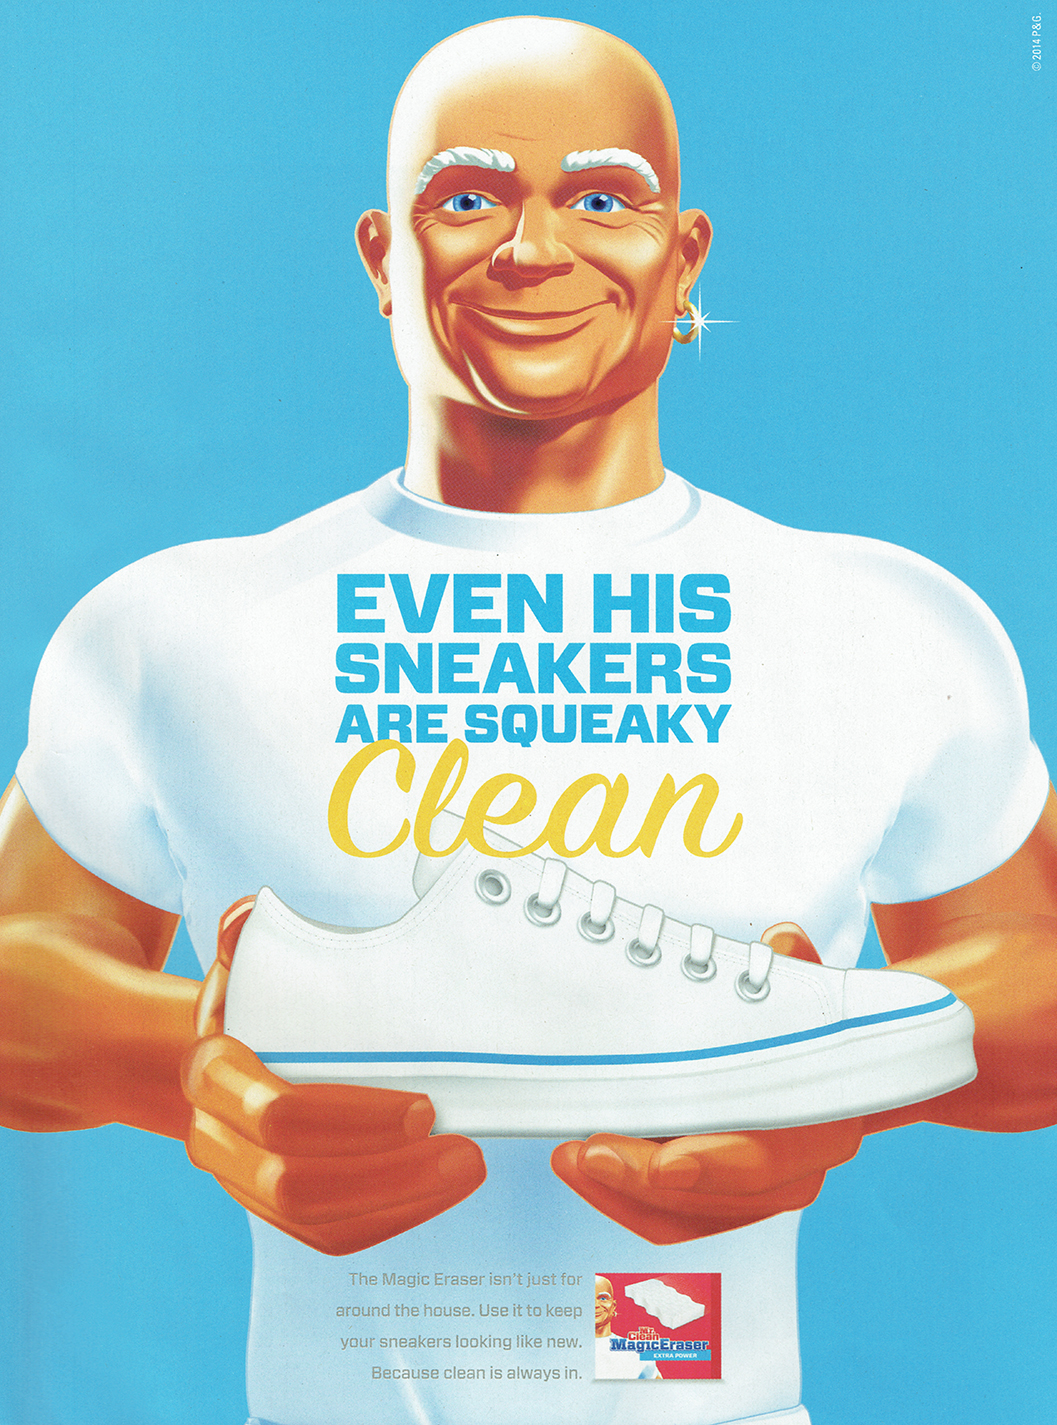 Mr. Clean.